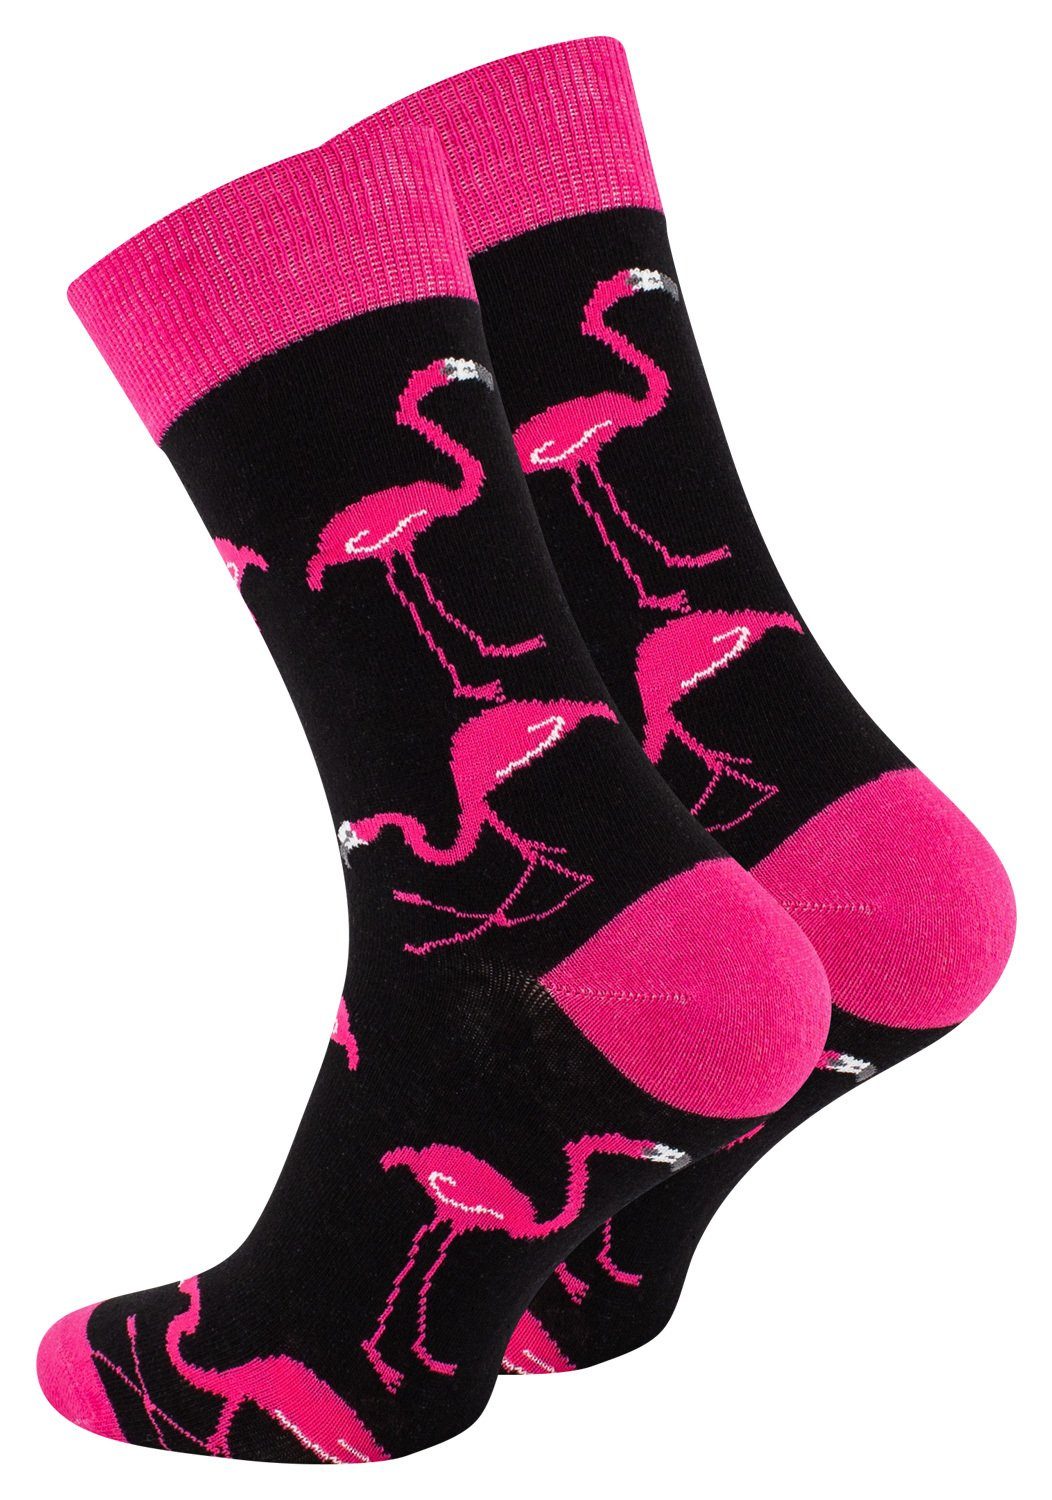 Vincent Creation® Socken mit bunten lustigen Motiven PinkFlamingo